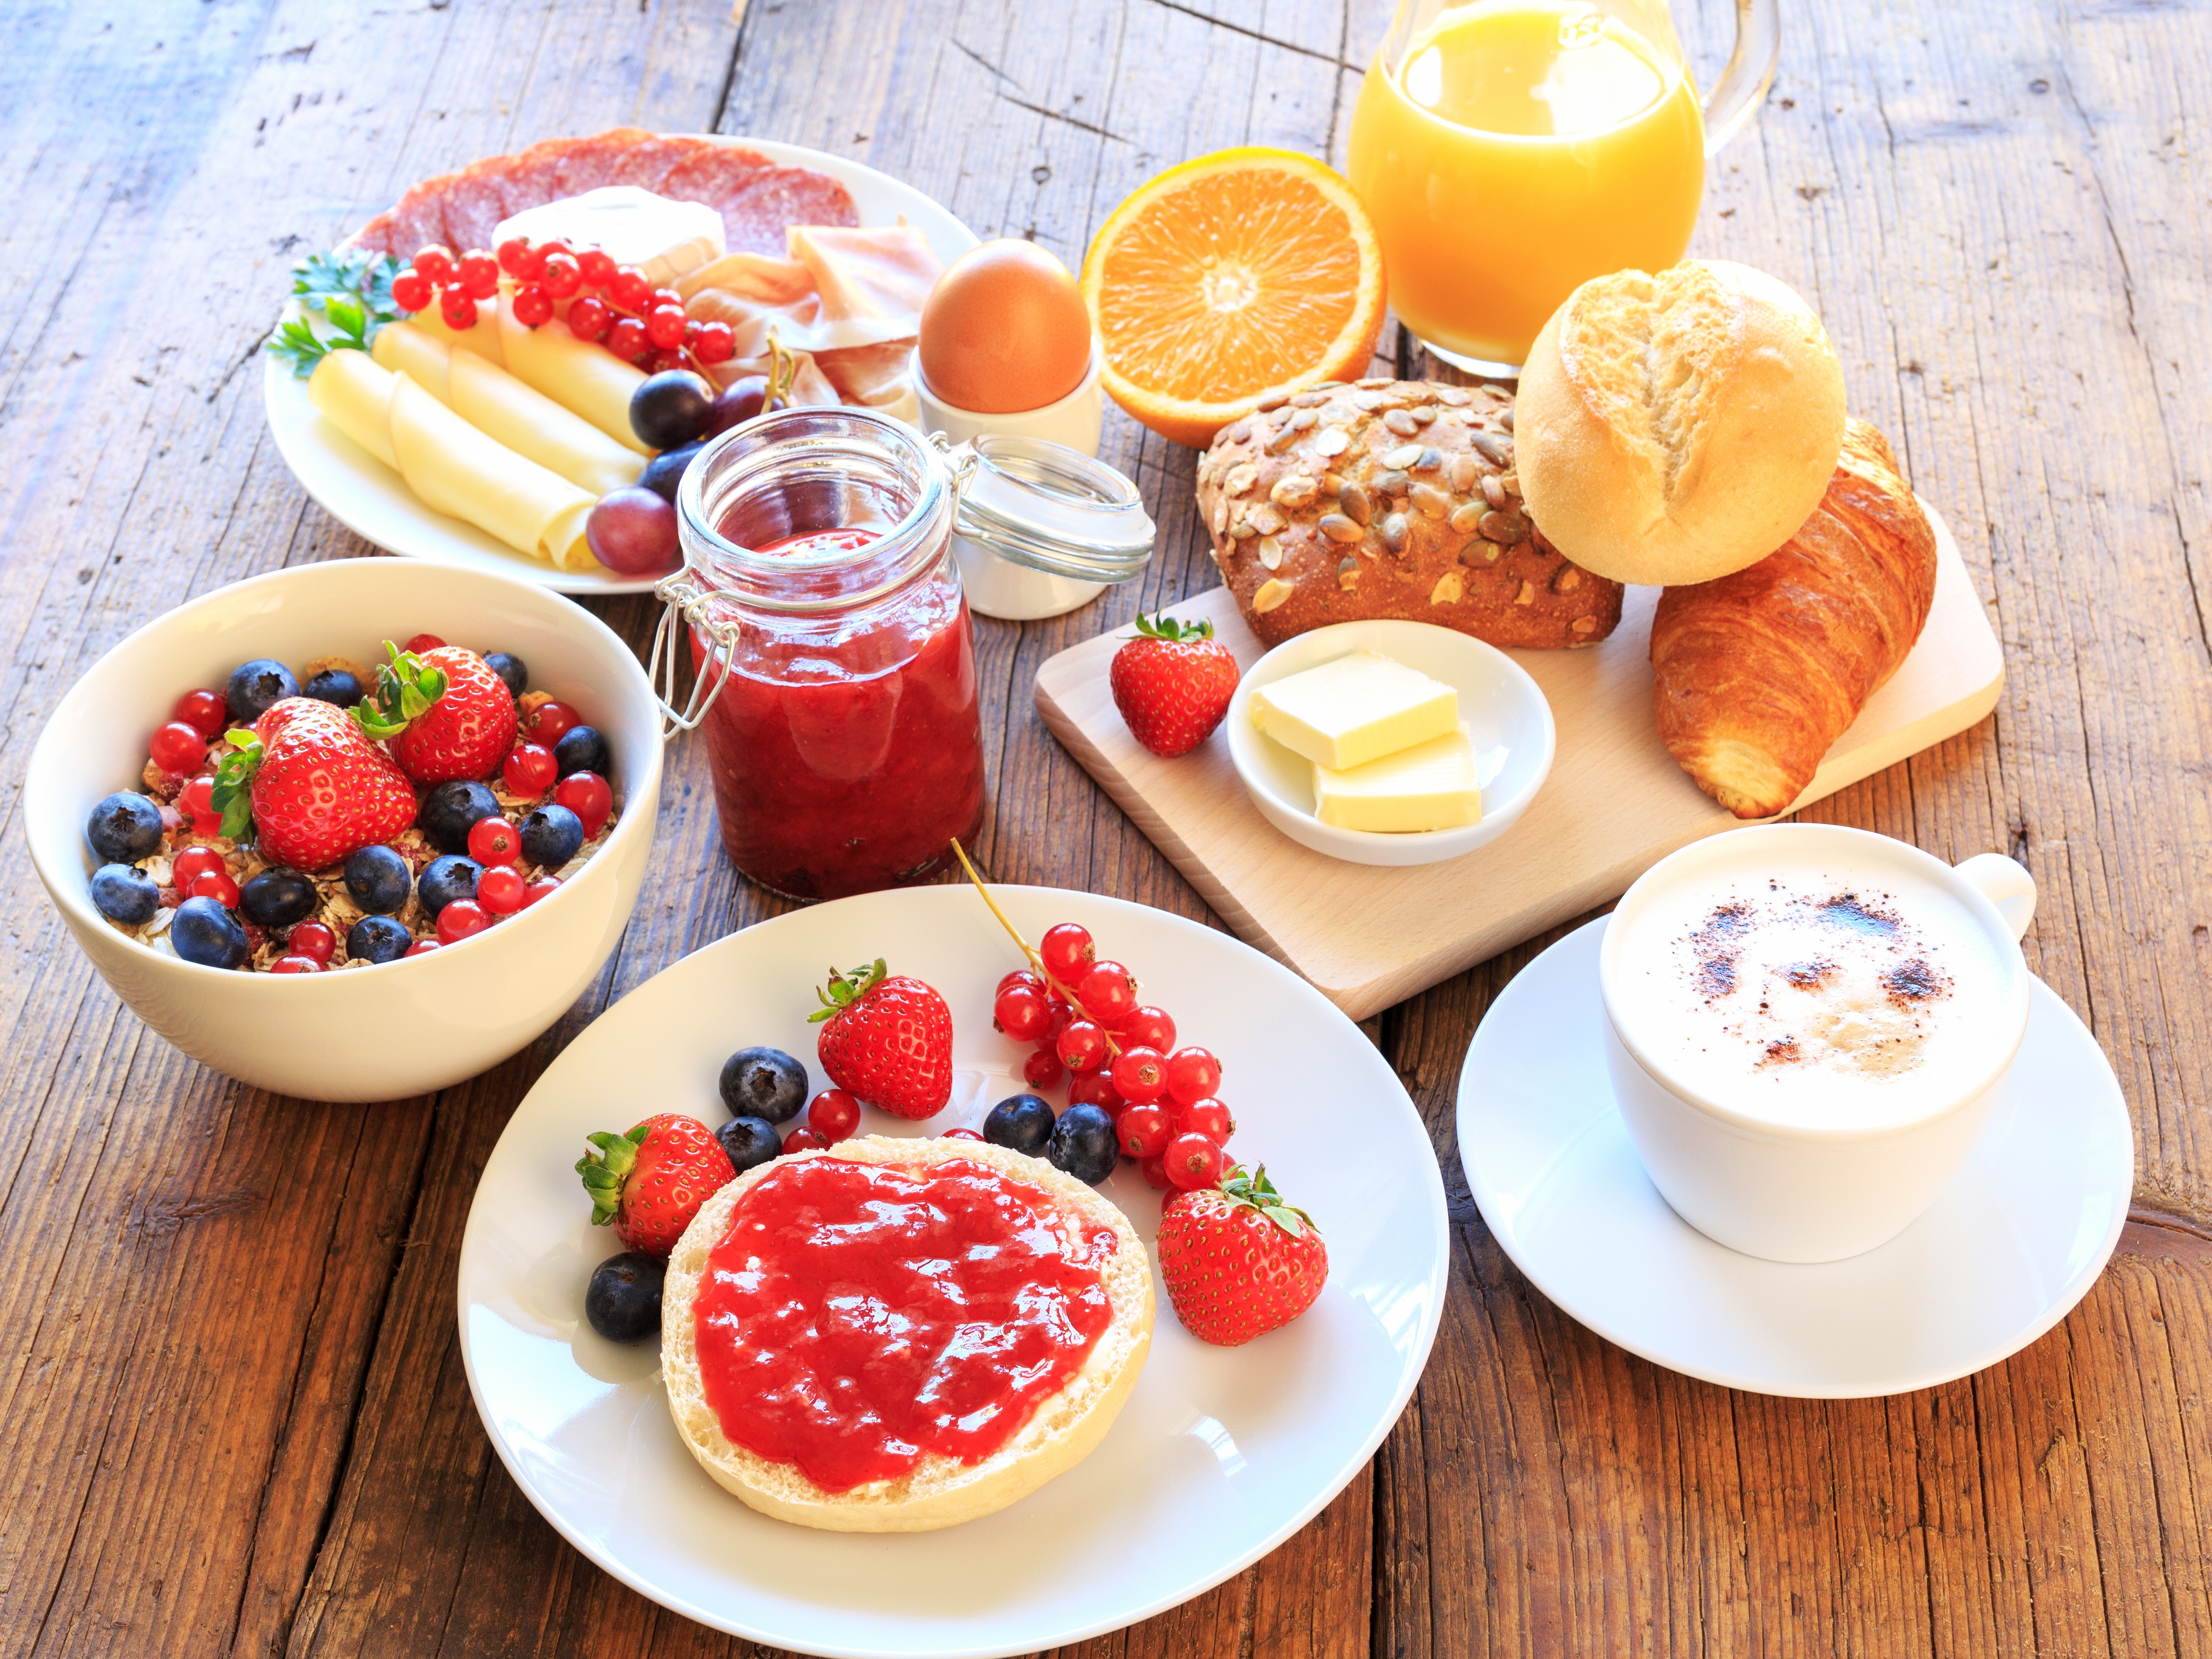 General 4608x3456 food breakfast orange (fruit) strawberries blueberries bread jelly coffee eggs vibrant